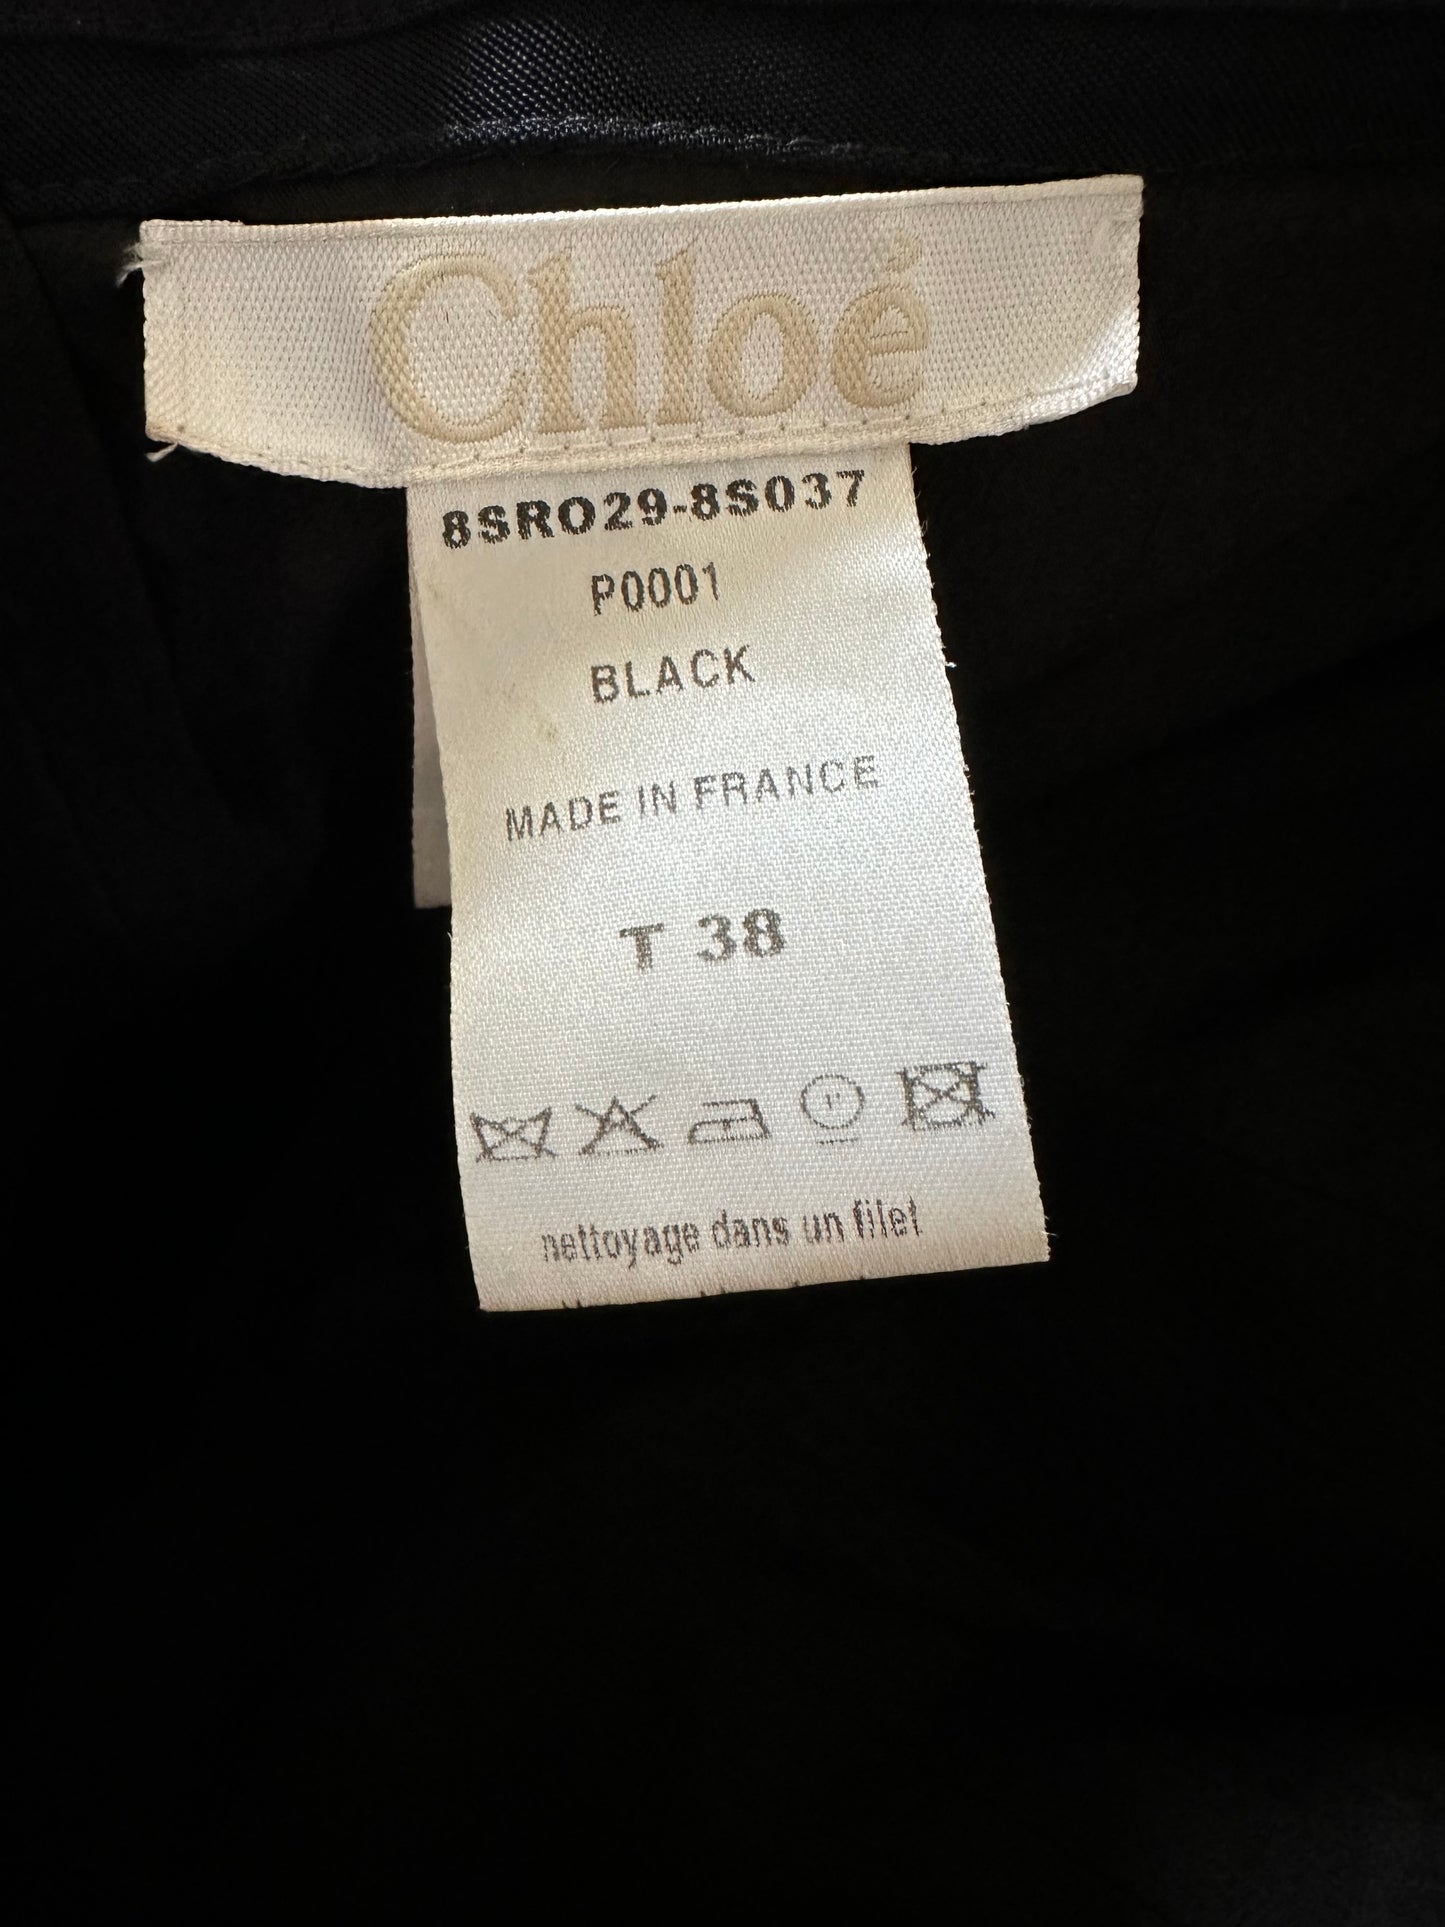 Chloé 2008 Strapless Black Embellished Dress Size 38